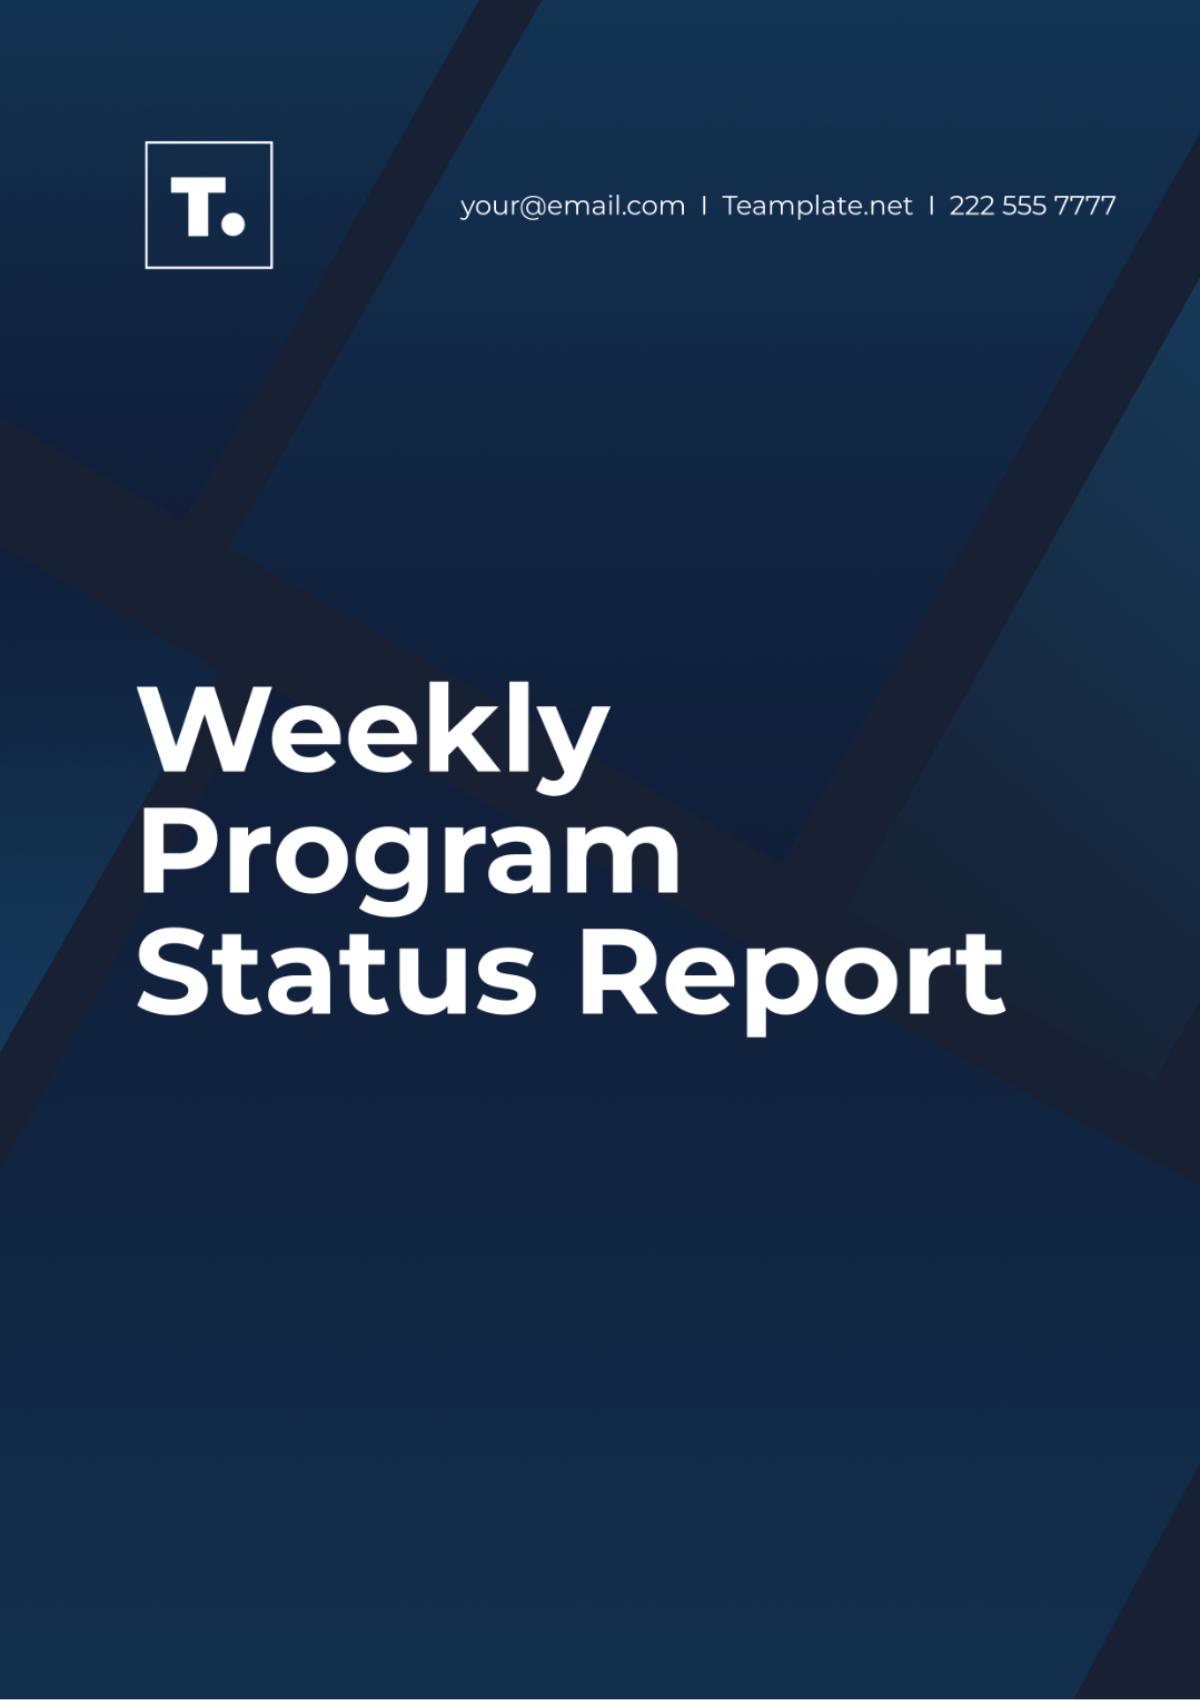 Weekly Program Status Report Template